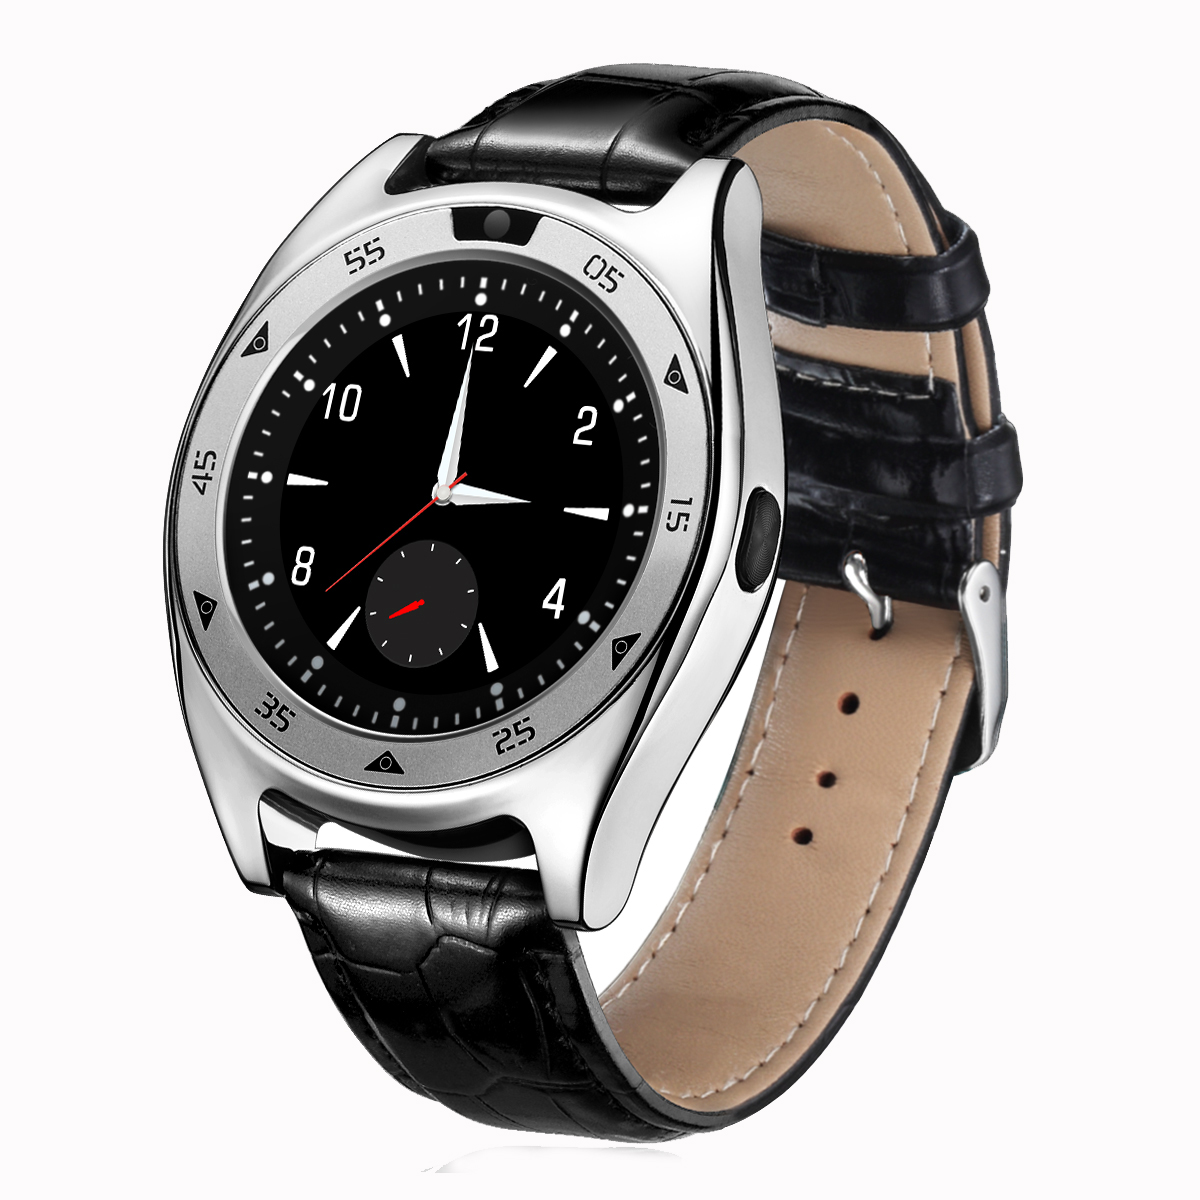 KALOAD TQ920 Intelligent Bluetooth Pictures Heart Rate Smart Watch Multifunction Smartwatch